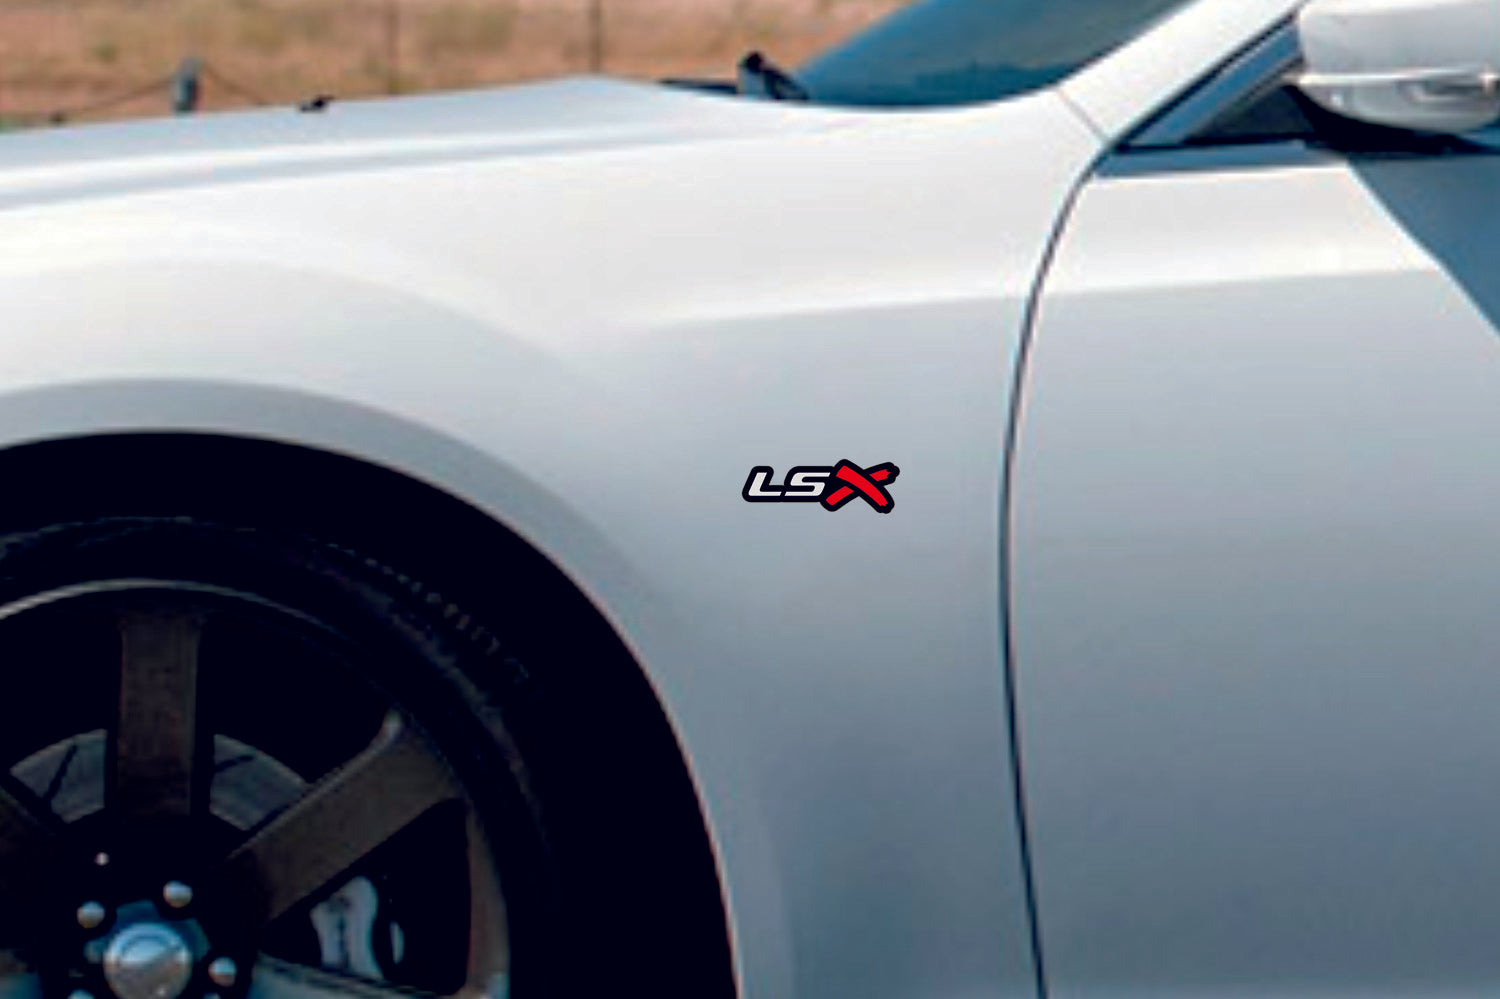 Chevrolet emblem for fenders with LSX logo